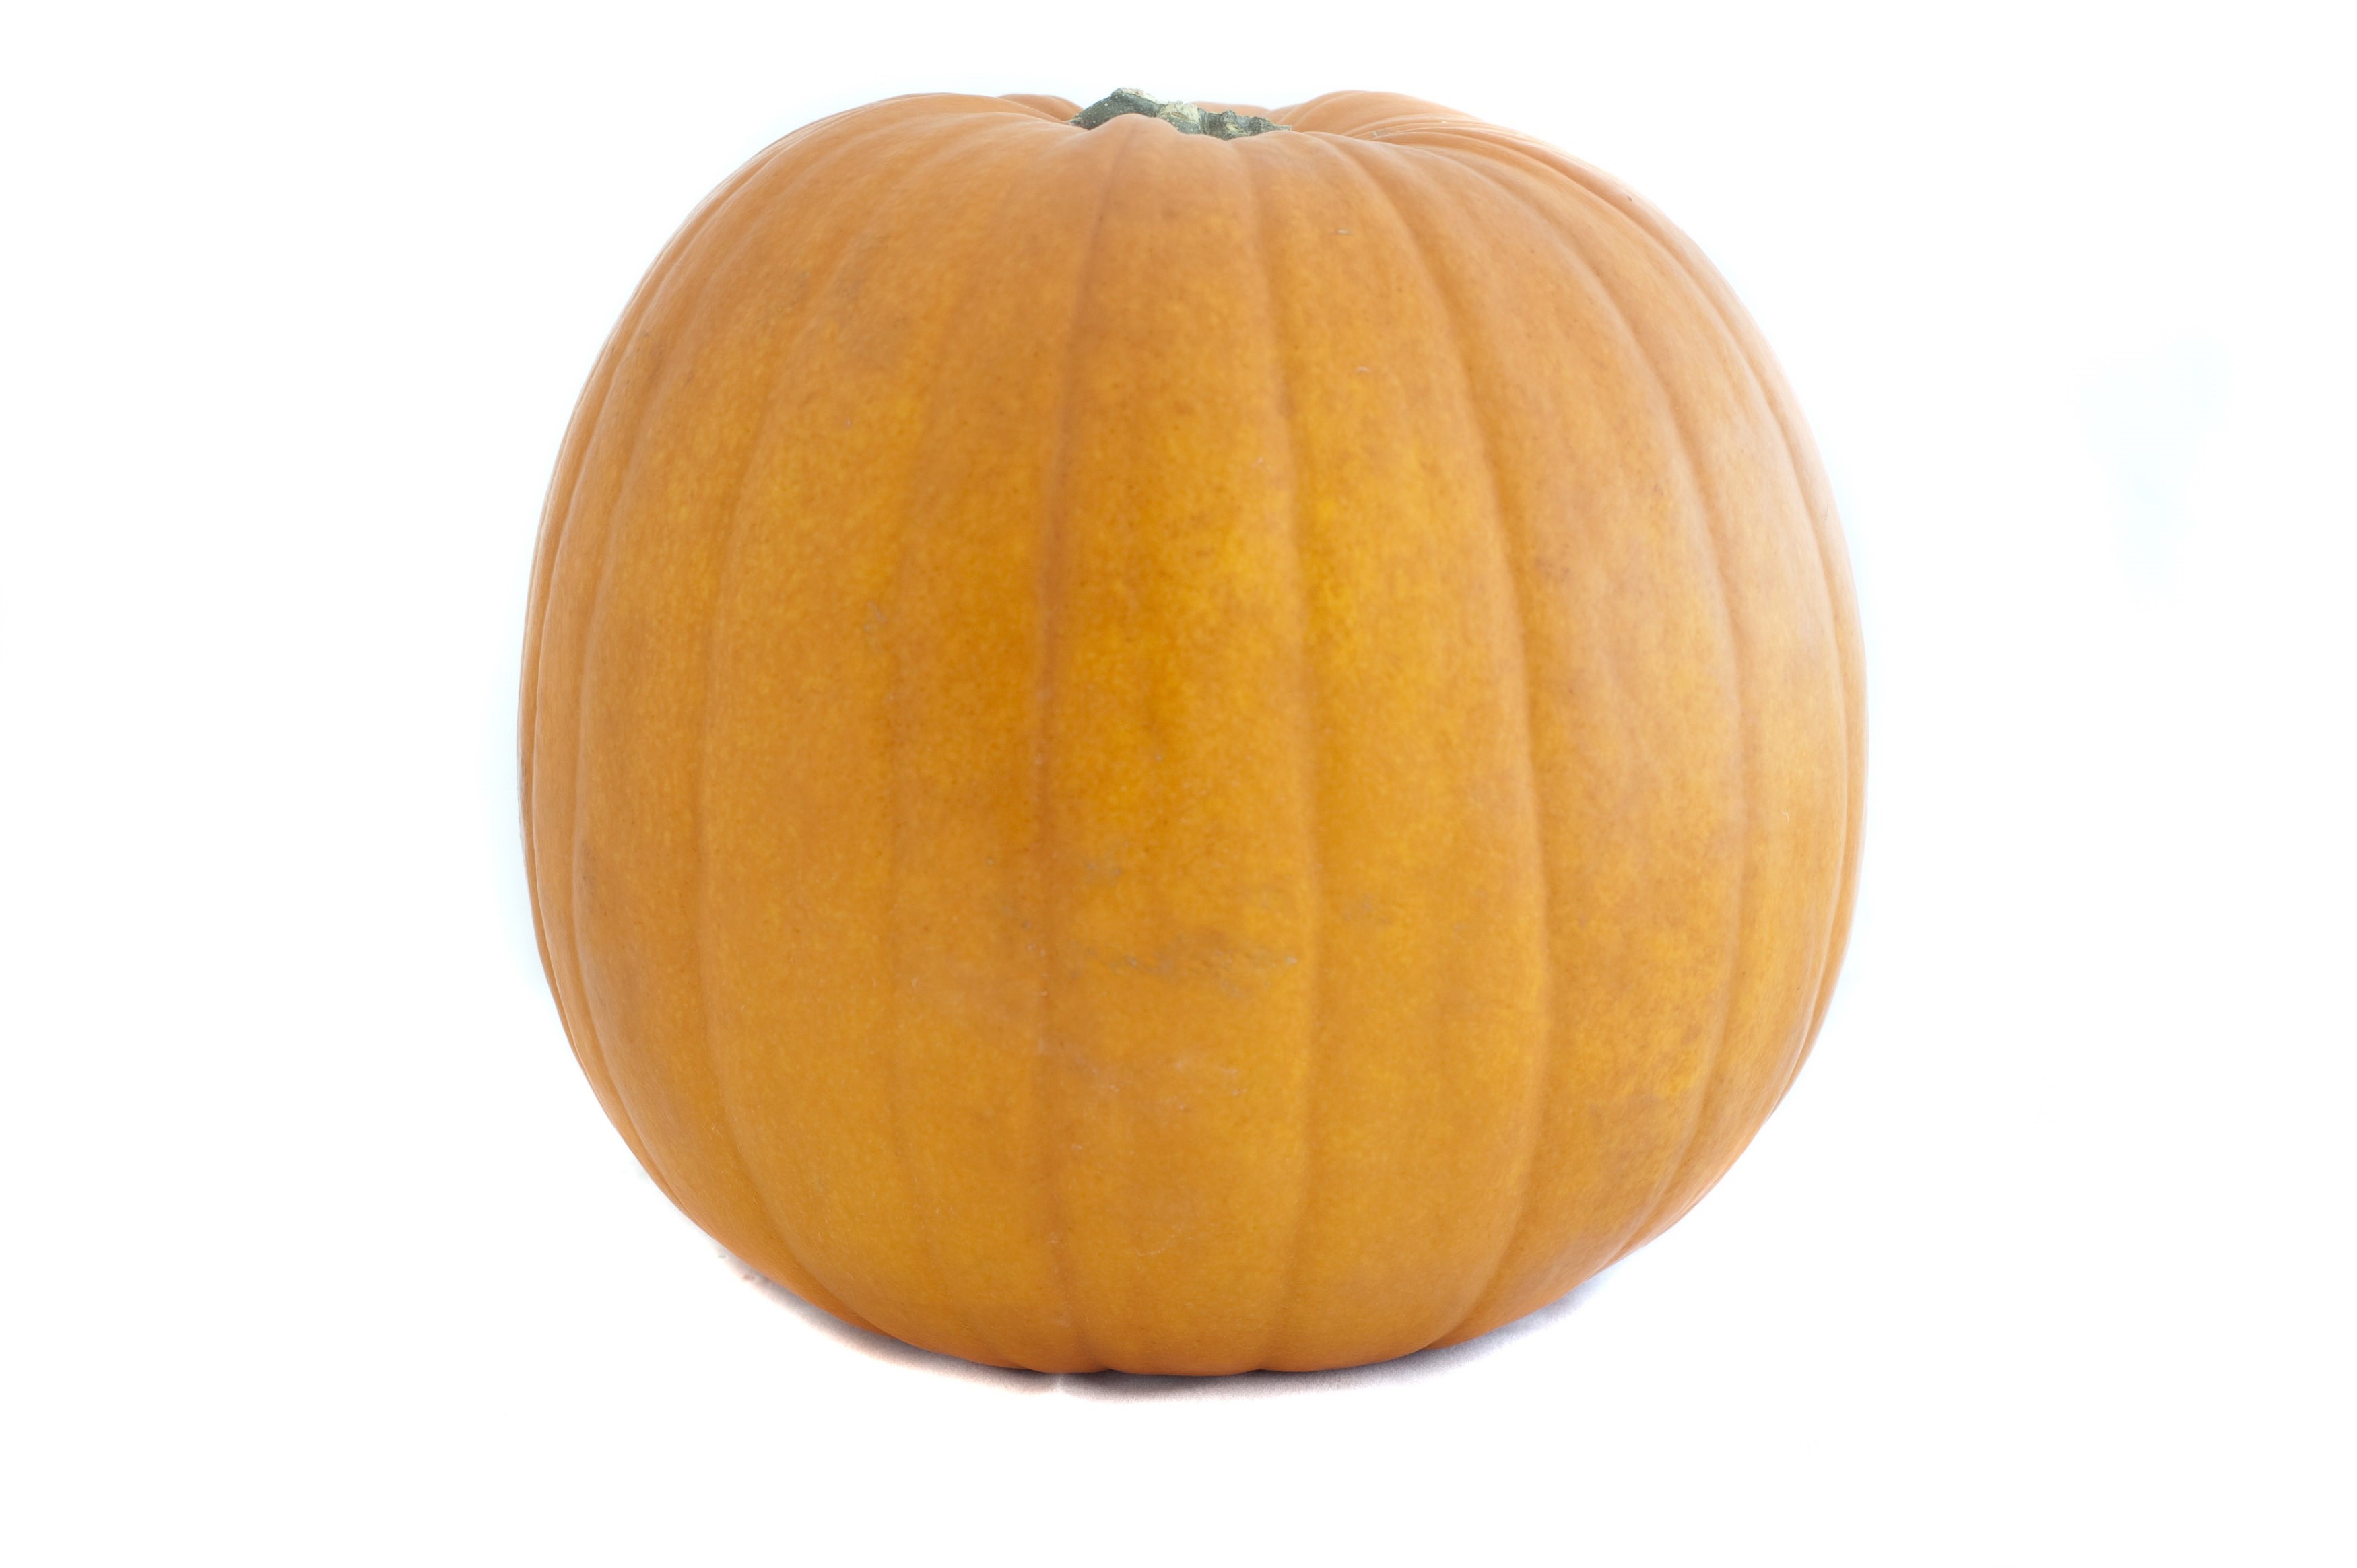 Whole fresh pumpkin - Free Stock Image